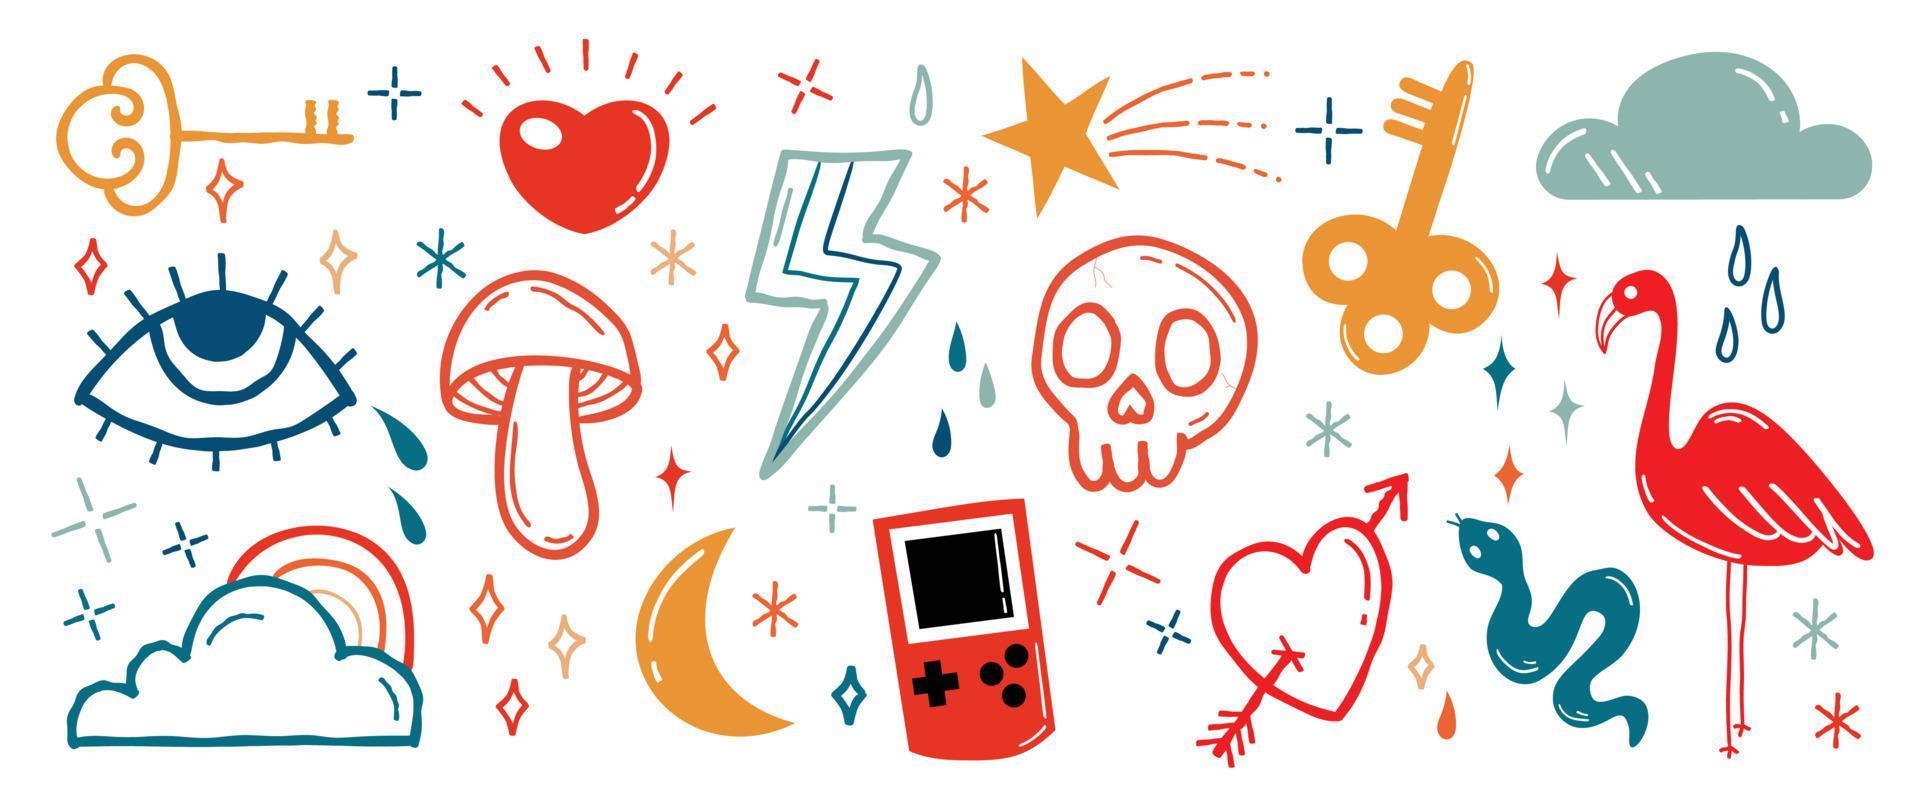 Set of doodle element vector illustration. Hand drawn vibrant color icon collection of heart, key, eye, mushroom, star, skull, heart, snake, flamingo. Design for logo, tattoo, sticker, decoration.